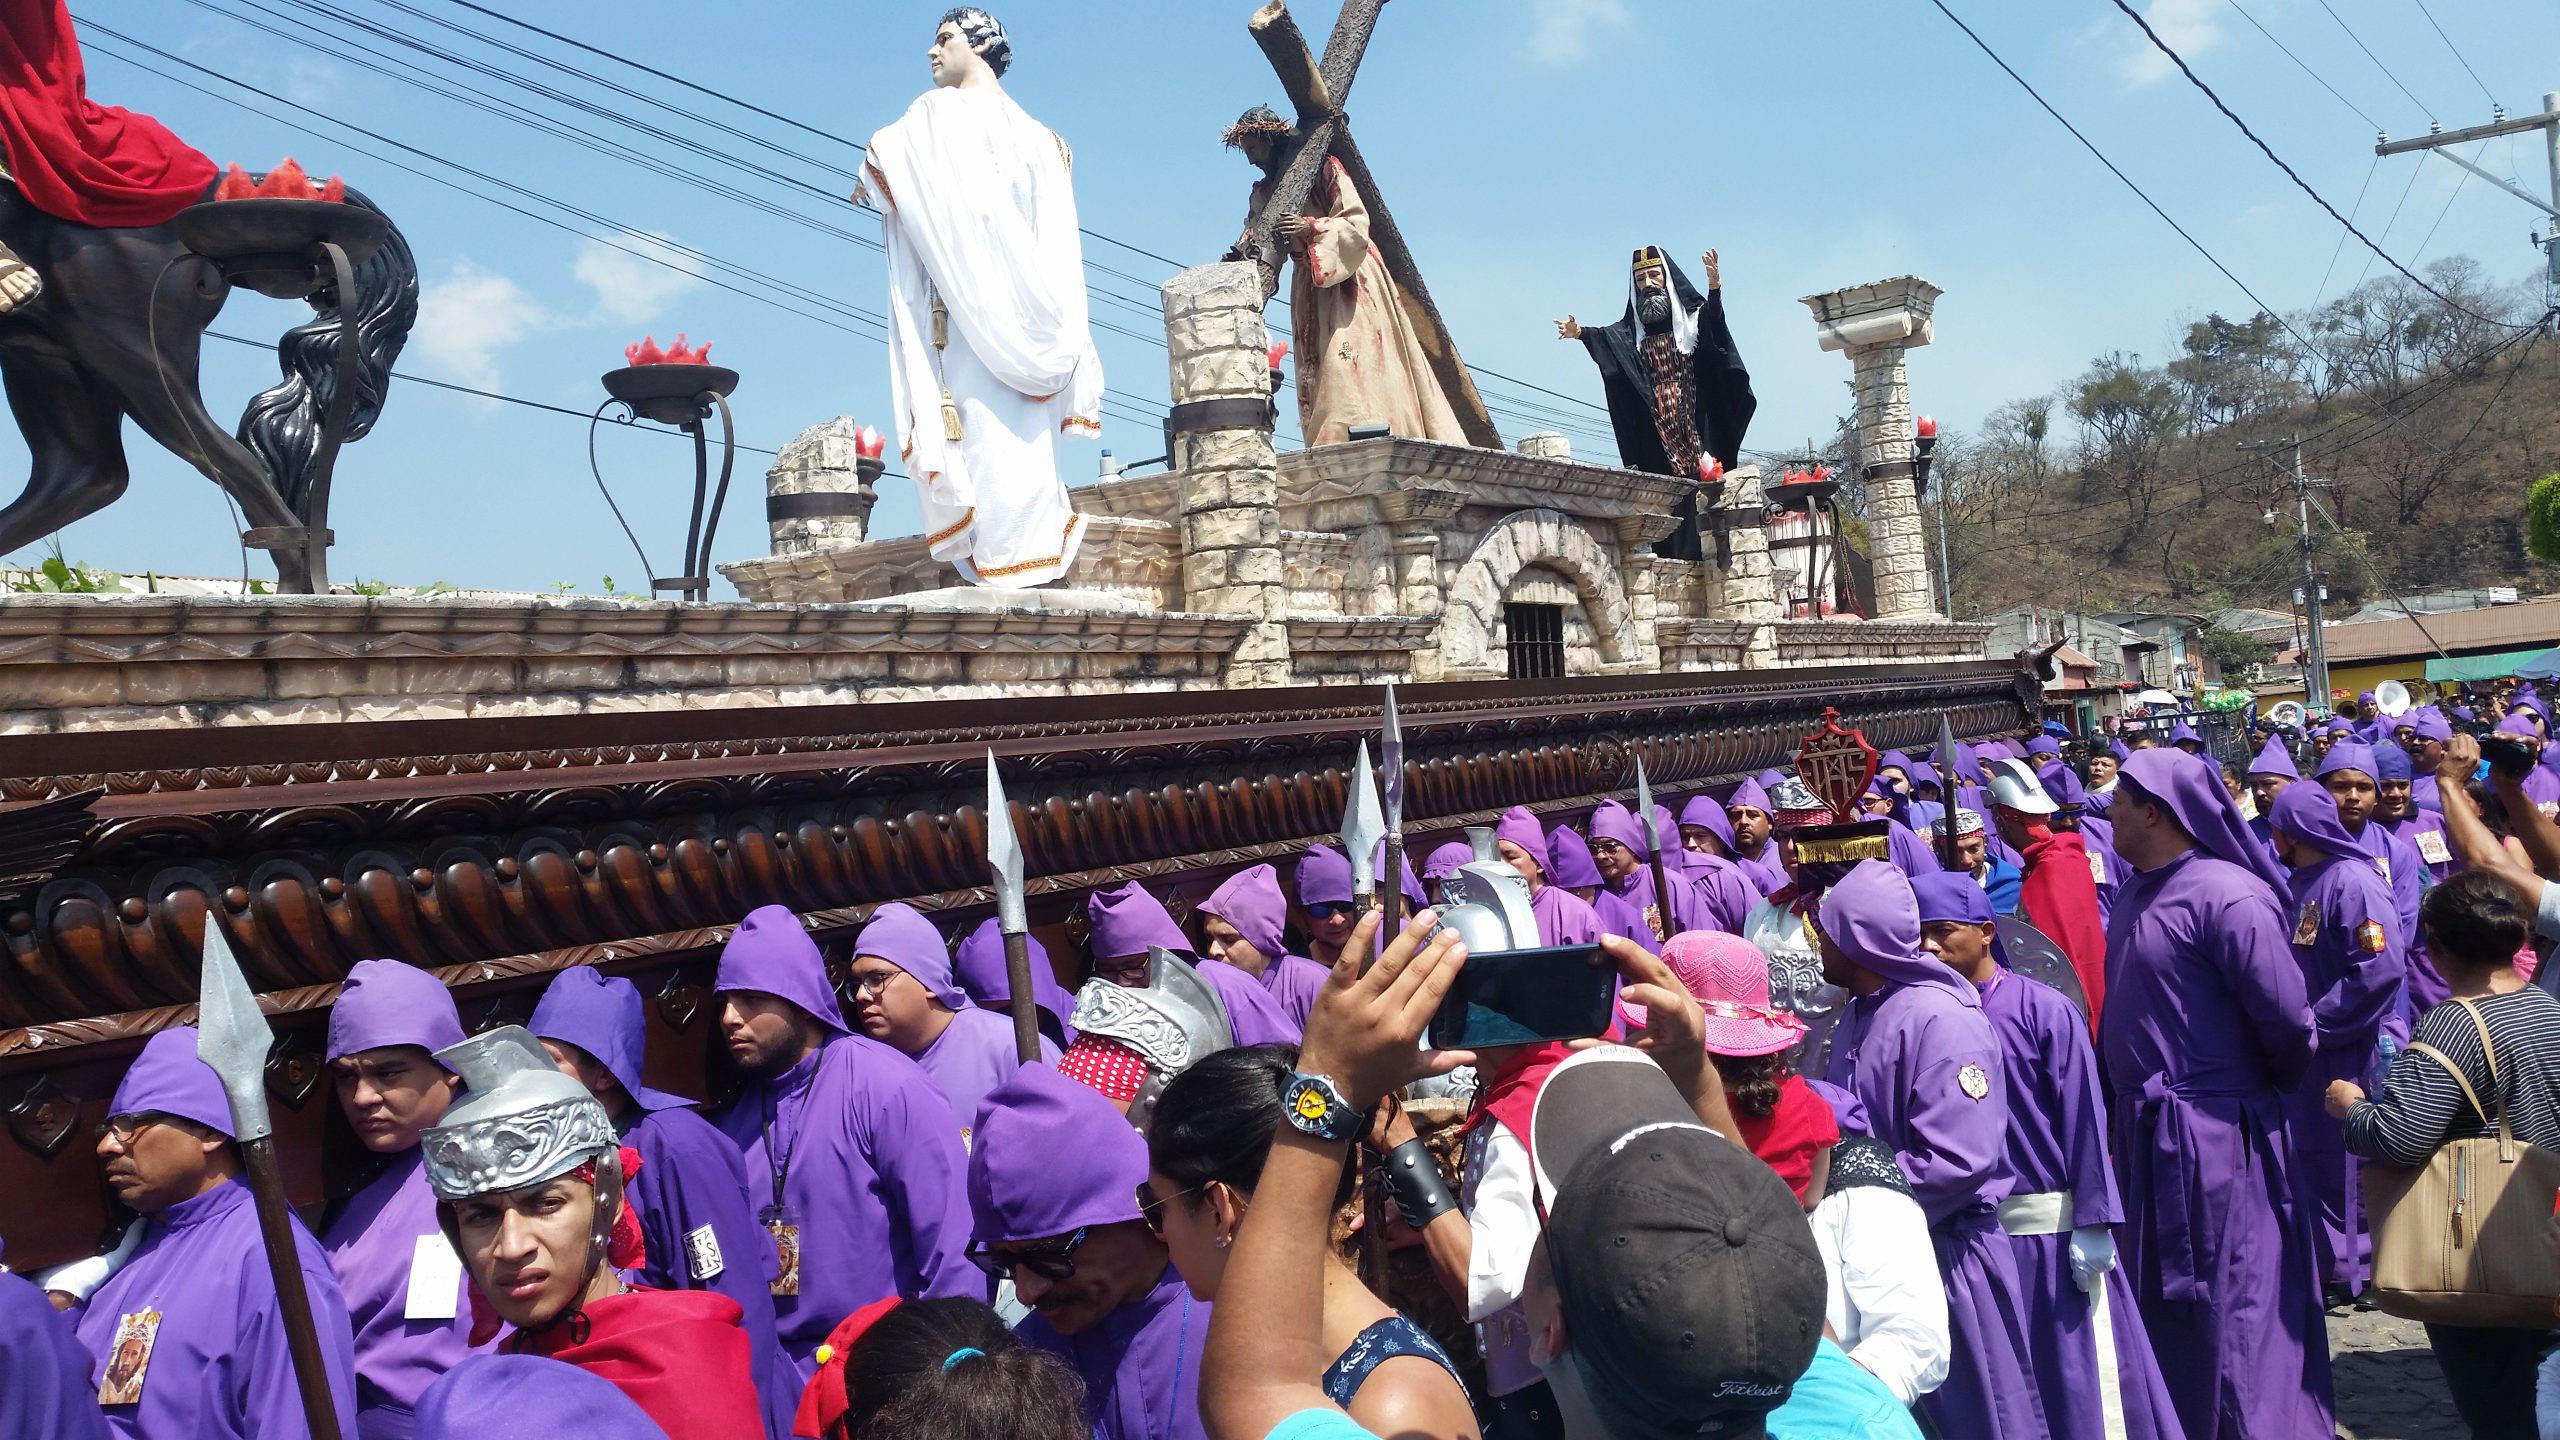 Semana Santa (Holy Week) in Antigua, Guatemala